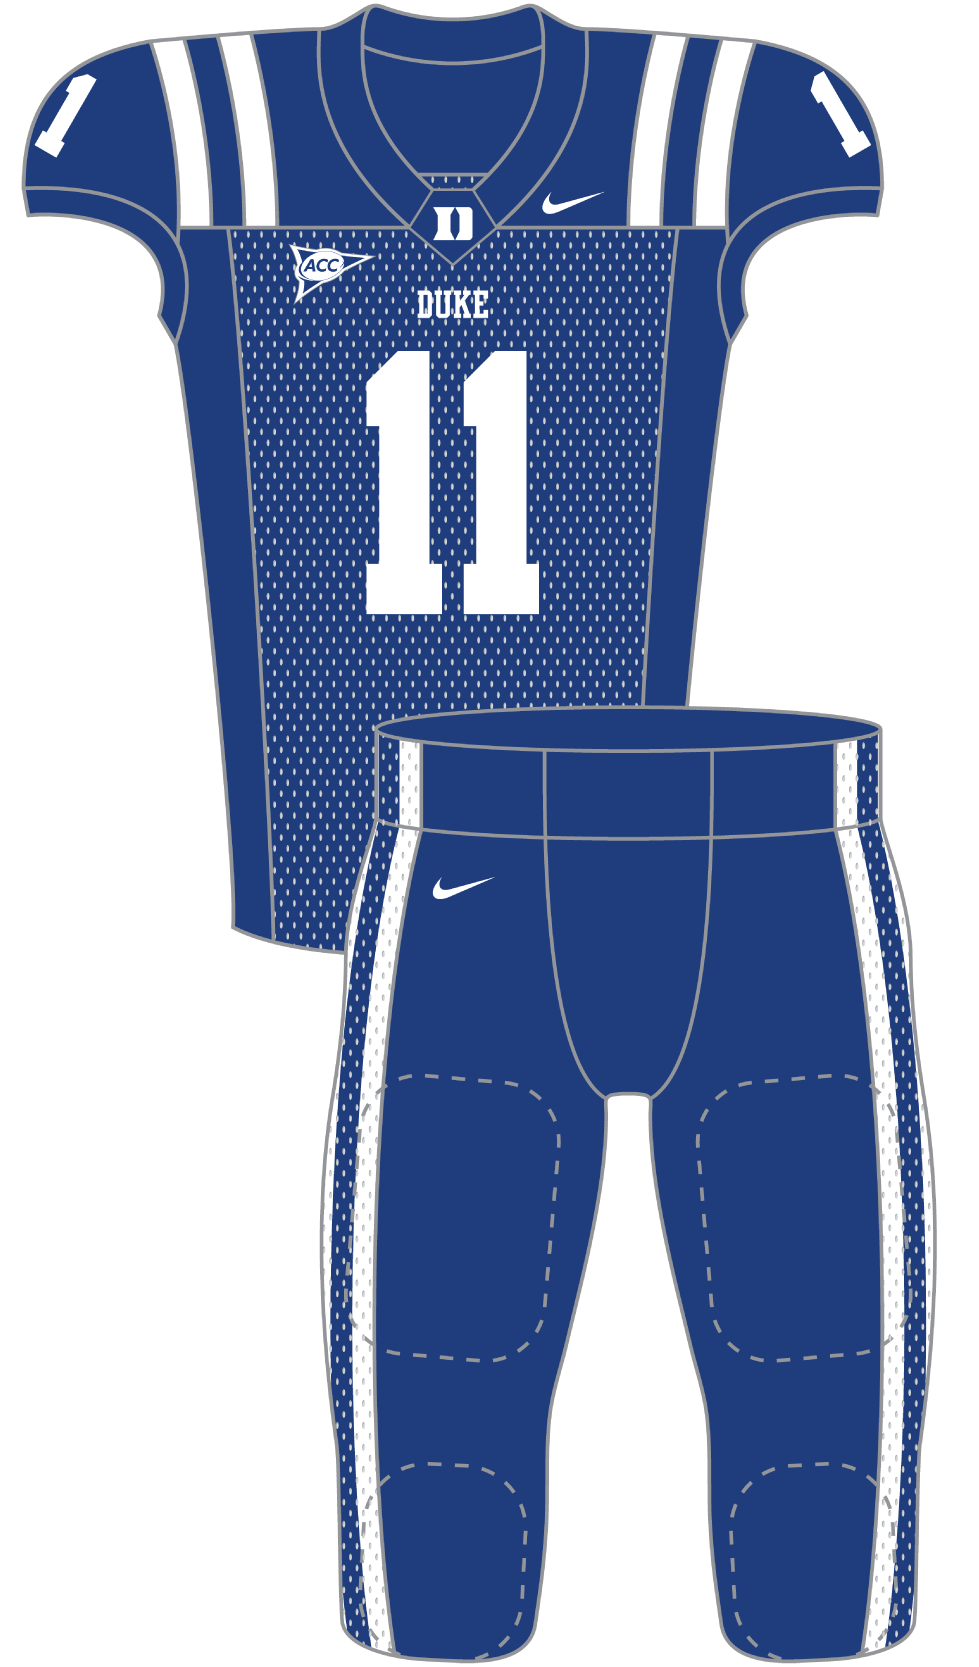 Duke 2011 Blue Uniform